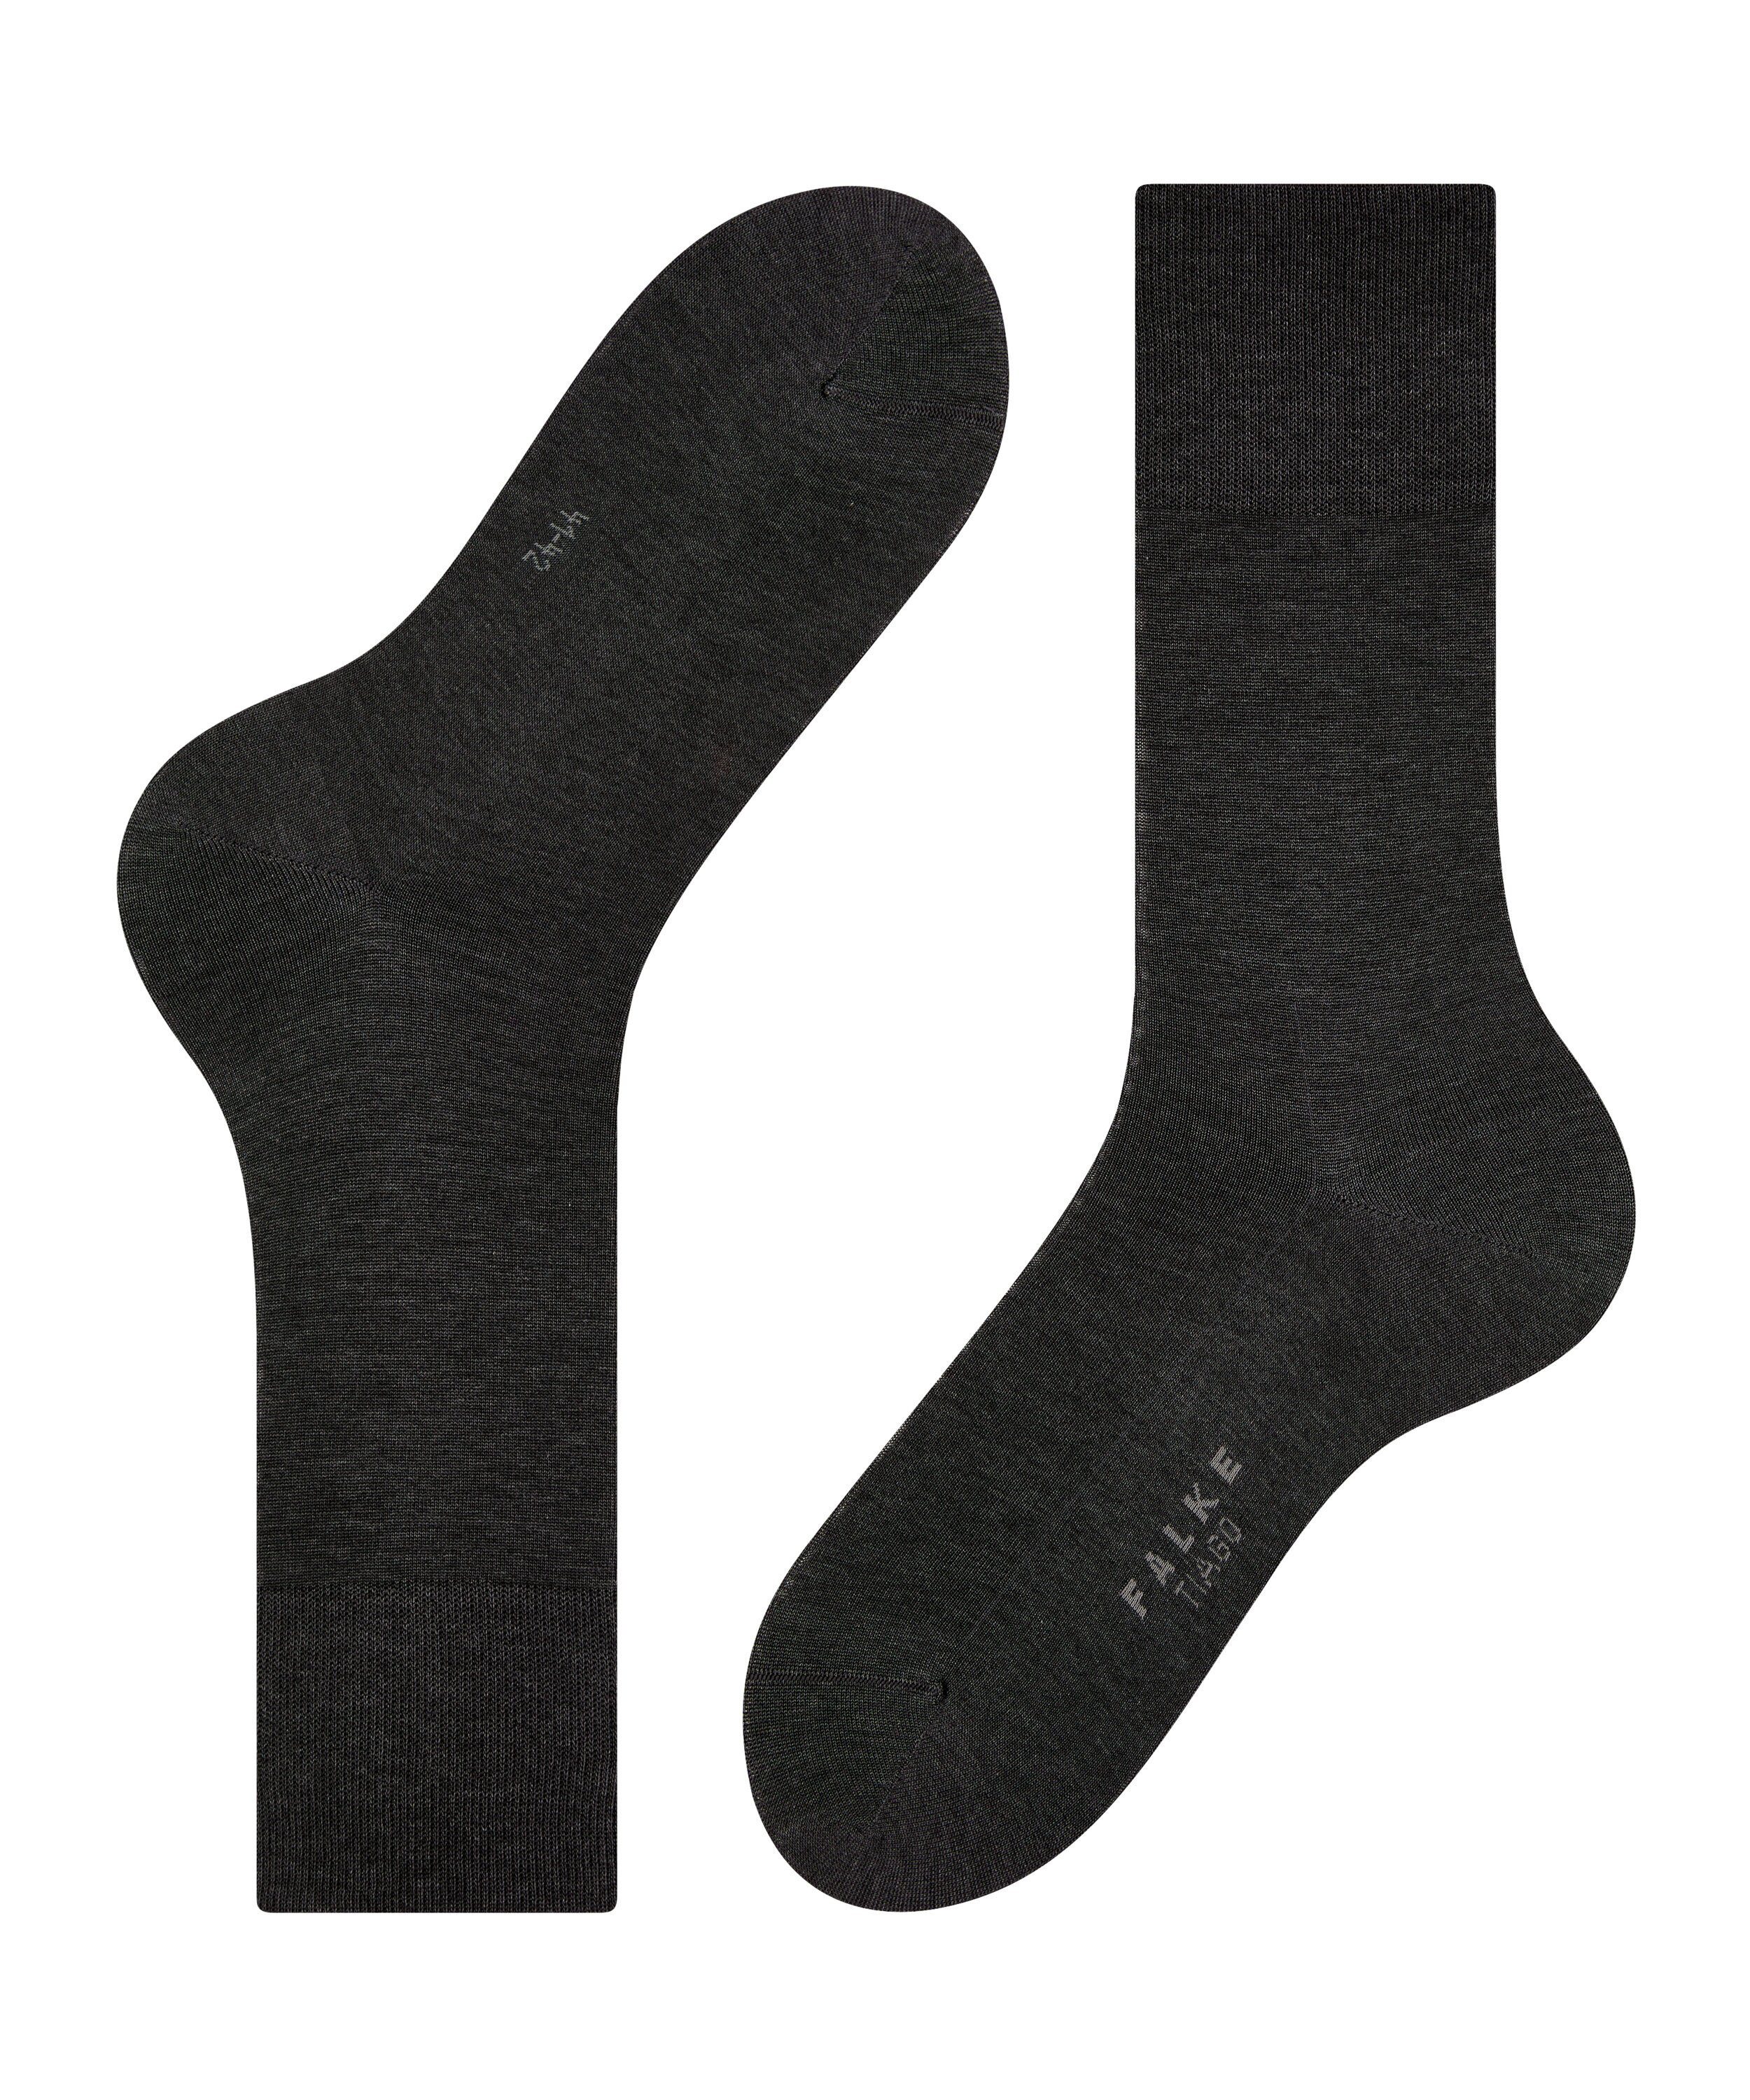 (1-Paar) Socken (3095) anthracite Tiago FALKE mel.